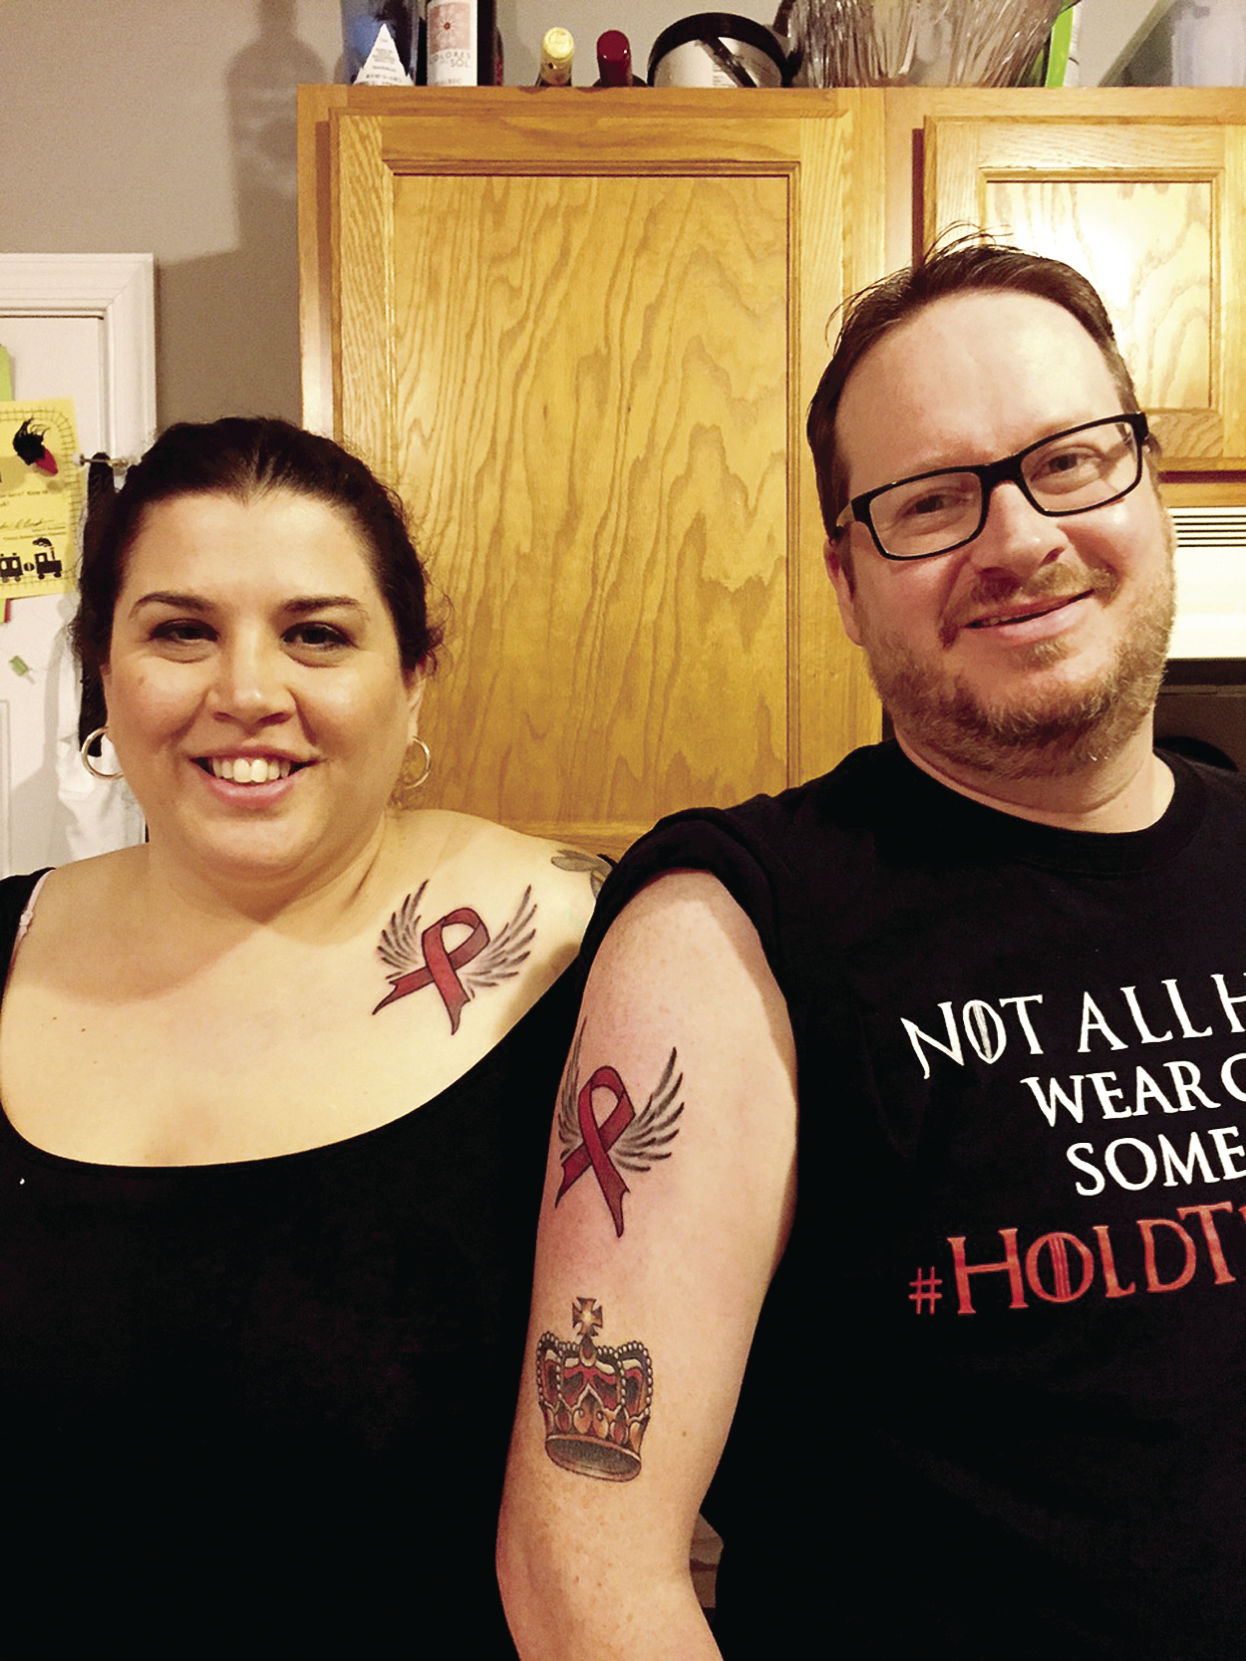 Salem transplant recipient advocates for those still waiting